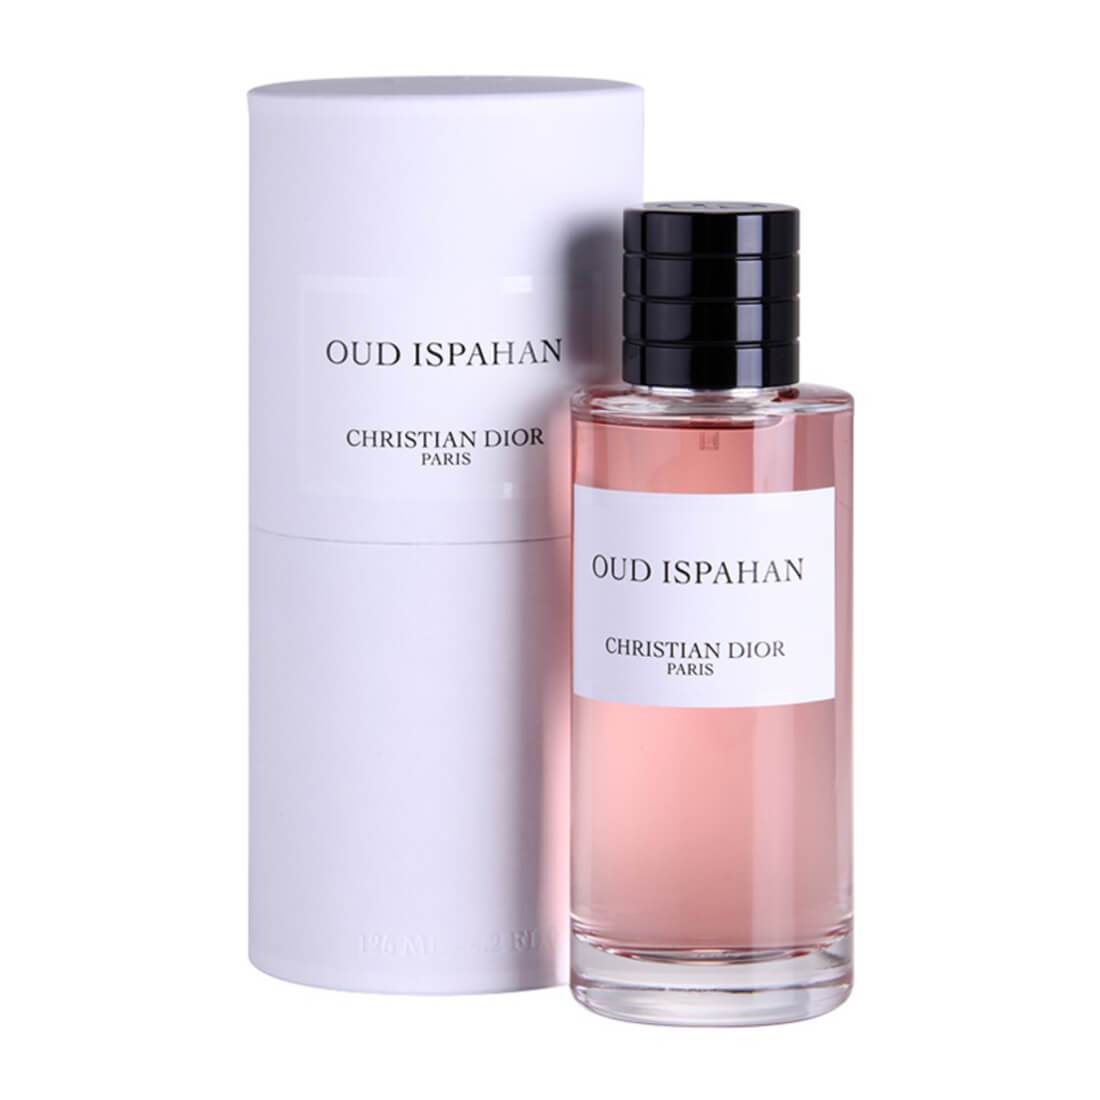 Christian Dior Oud Ispahan Perfume Review